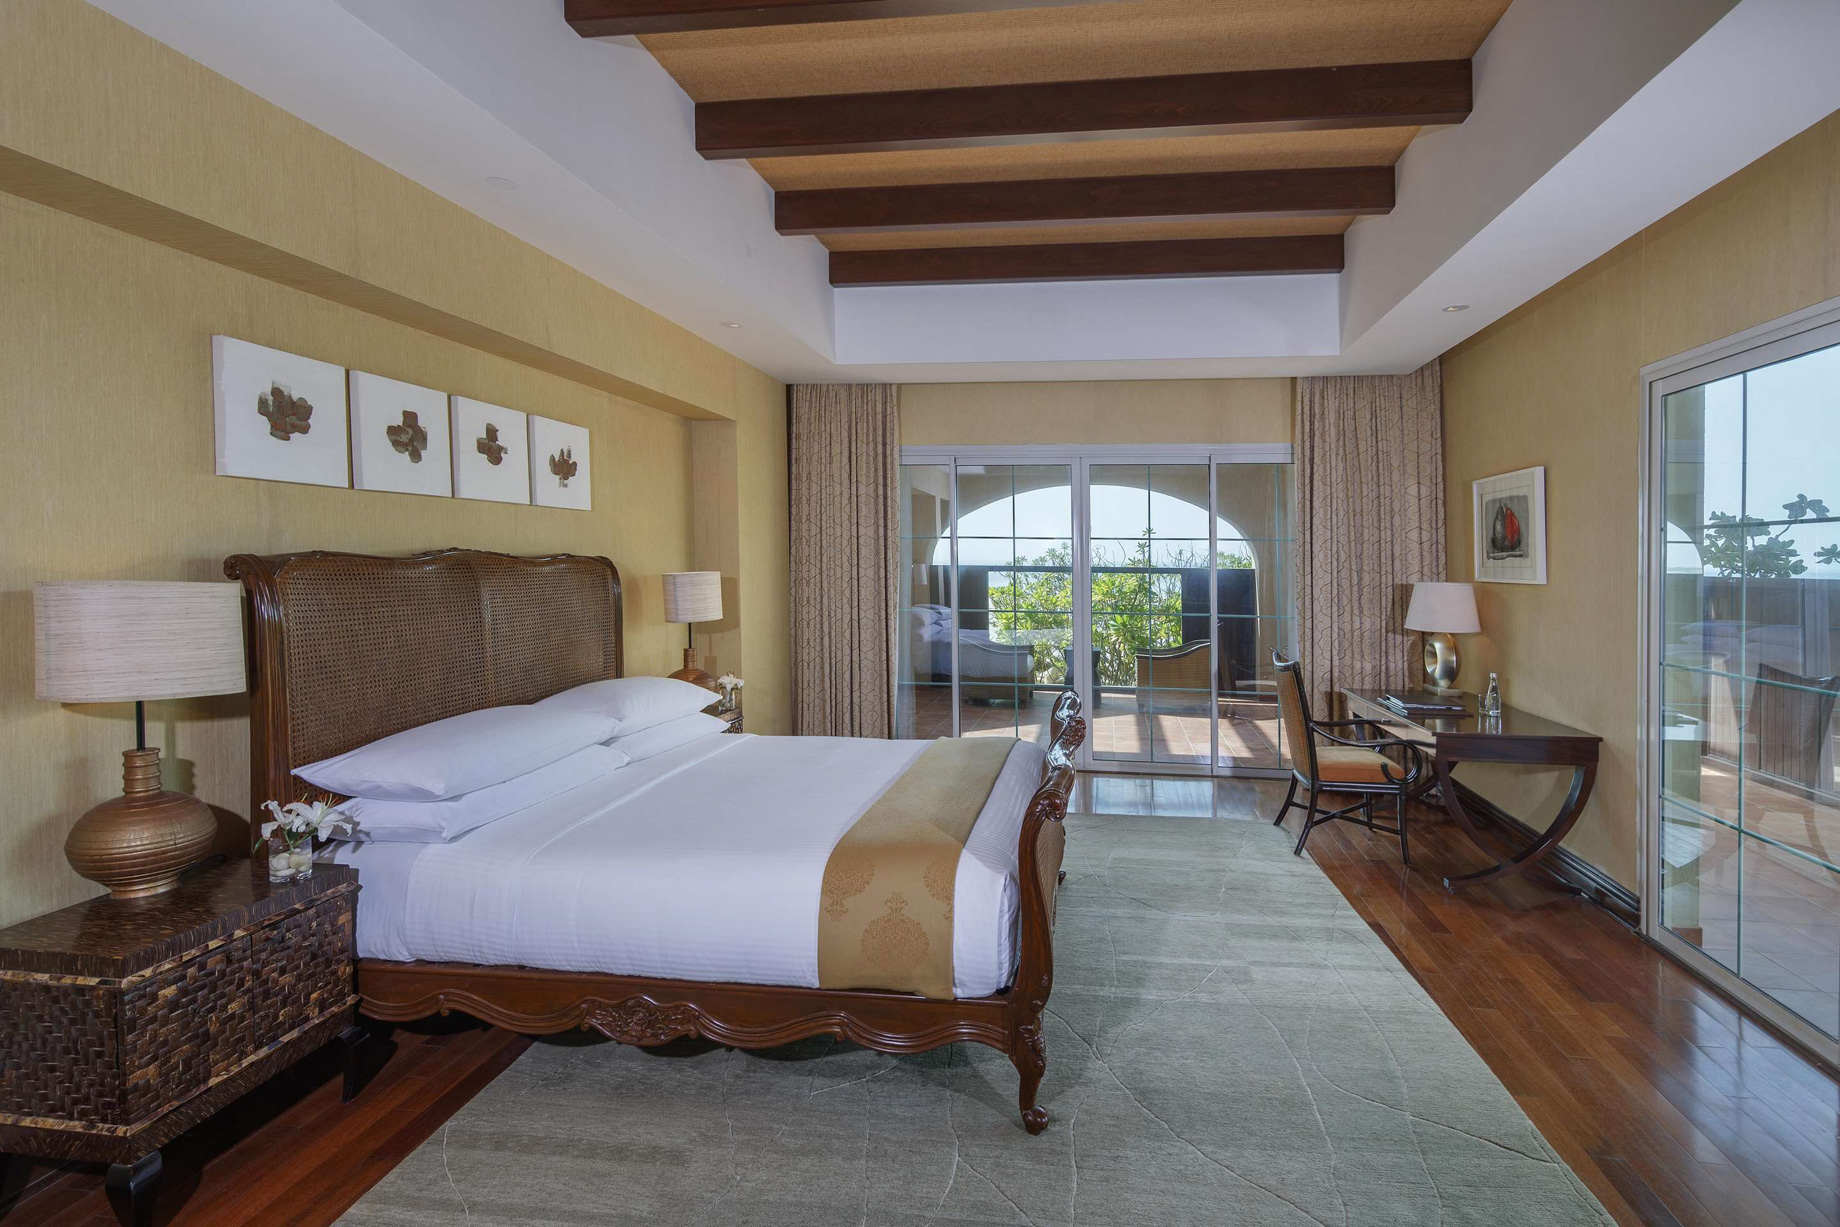 Desert Islands Resort & Spa by Anantara – Abu Dhabi – United Arab Emirates – Two Bedroom Anantara Pool Villa